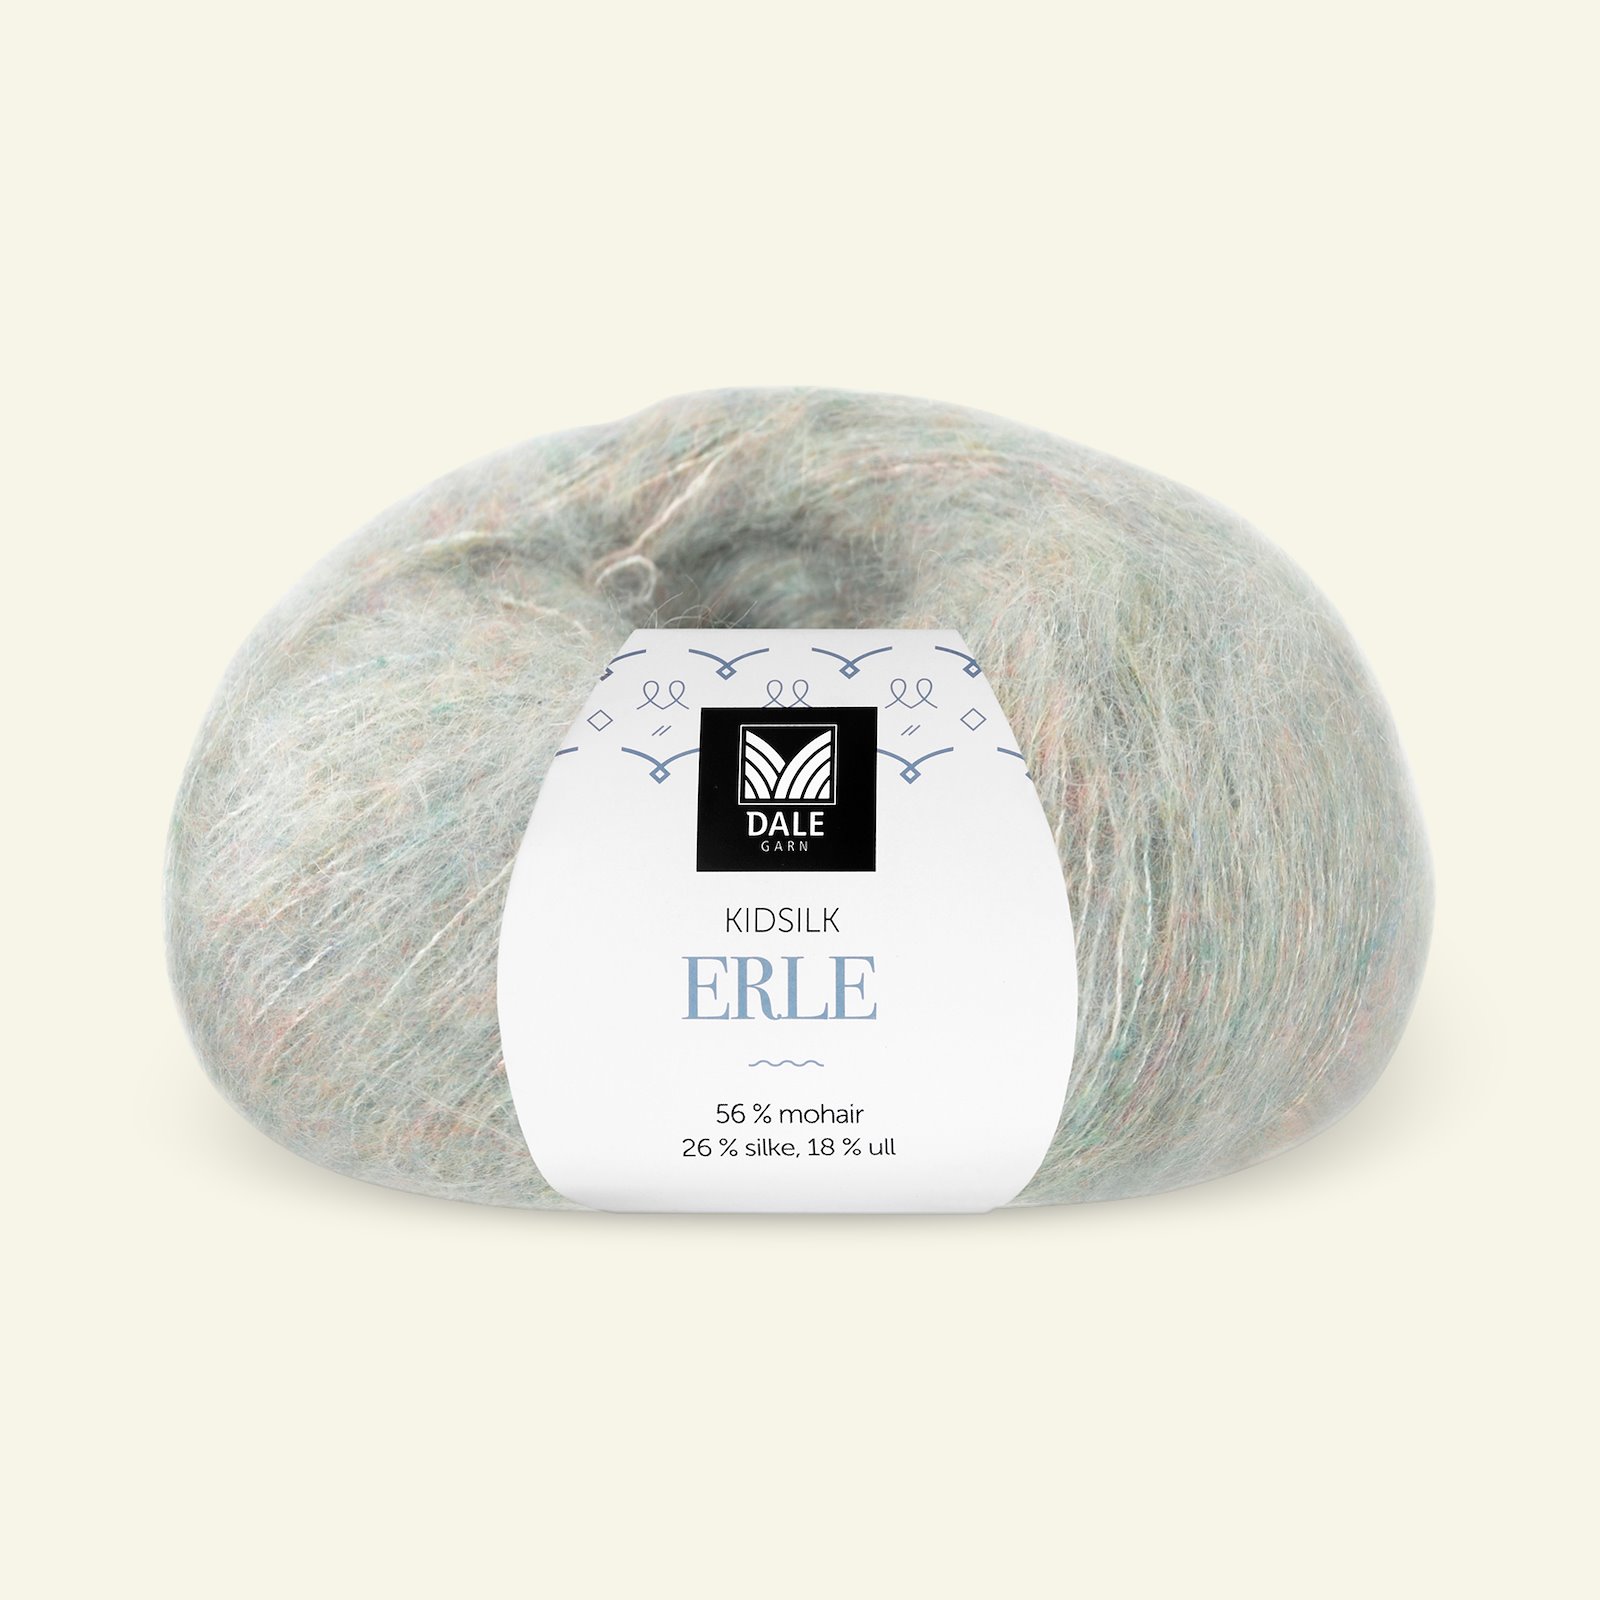 Dale Garn, silk mohair wool yarn "Kidsilk Erle", green/rose mel. (9055) 90000793_pack